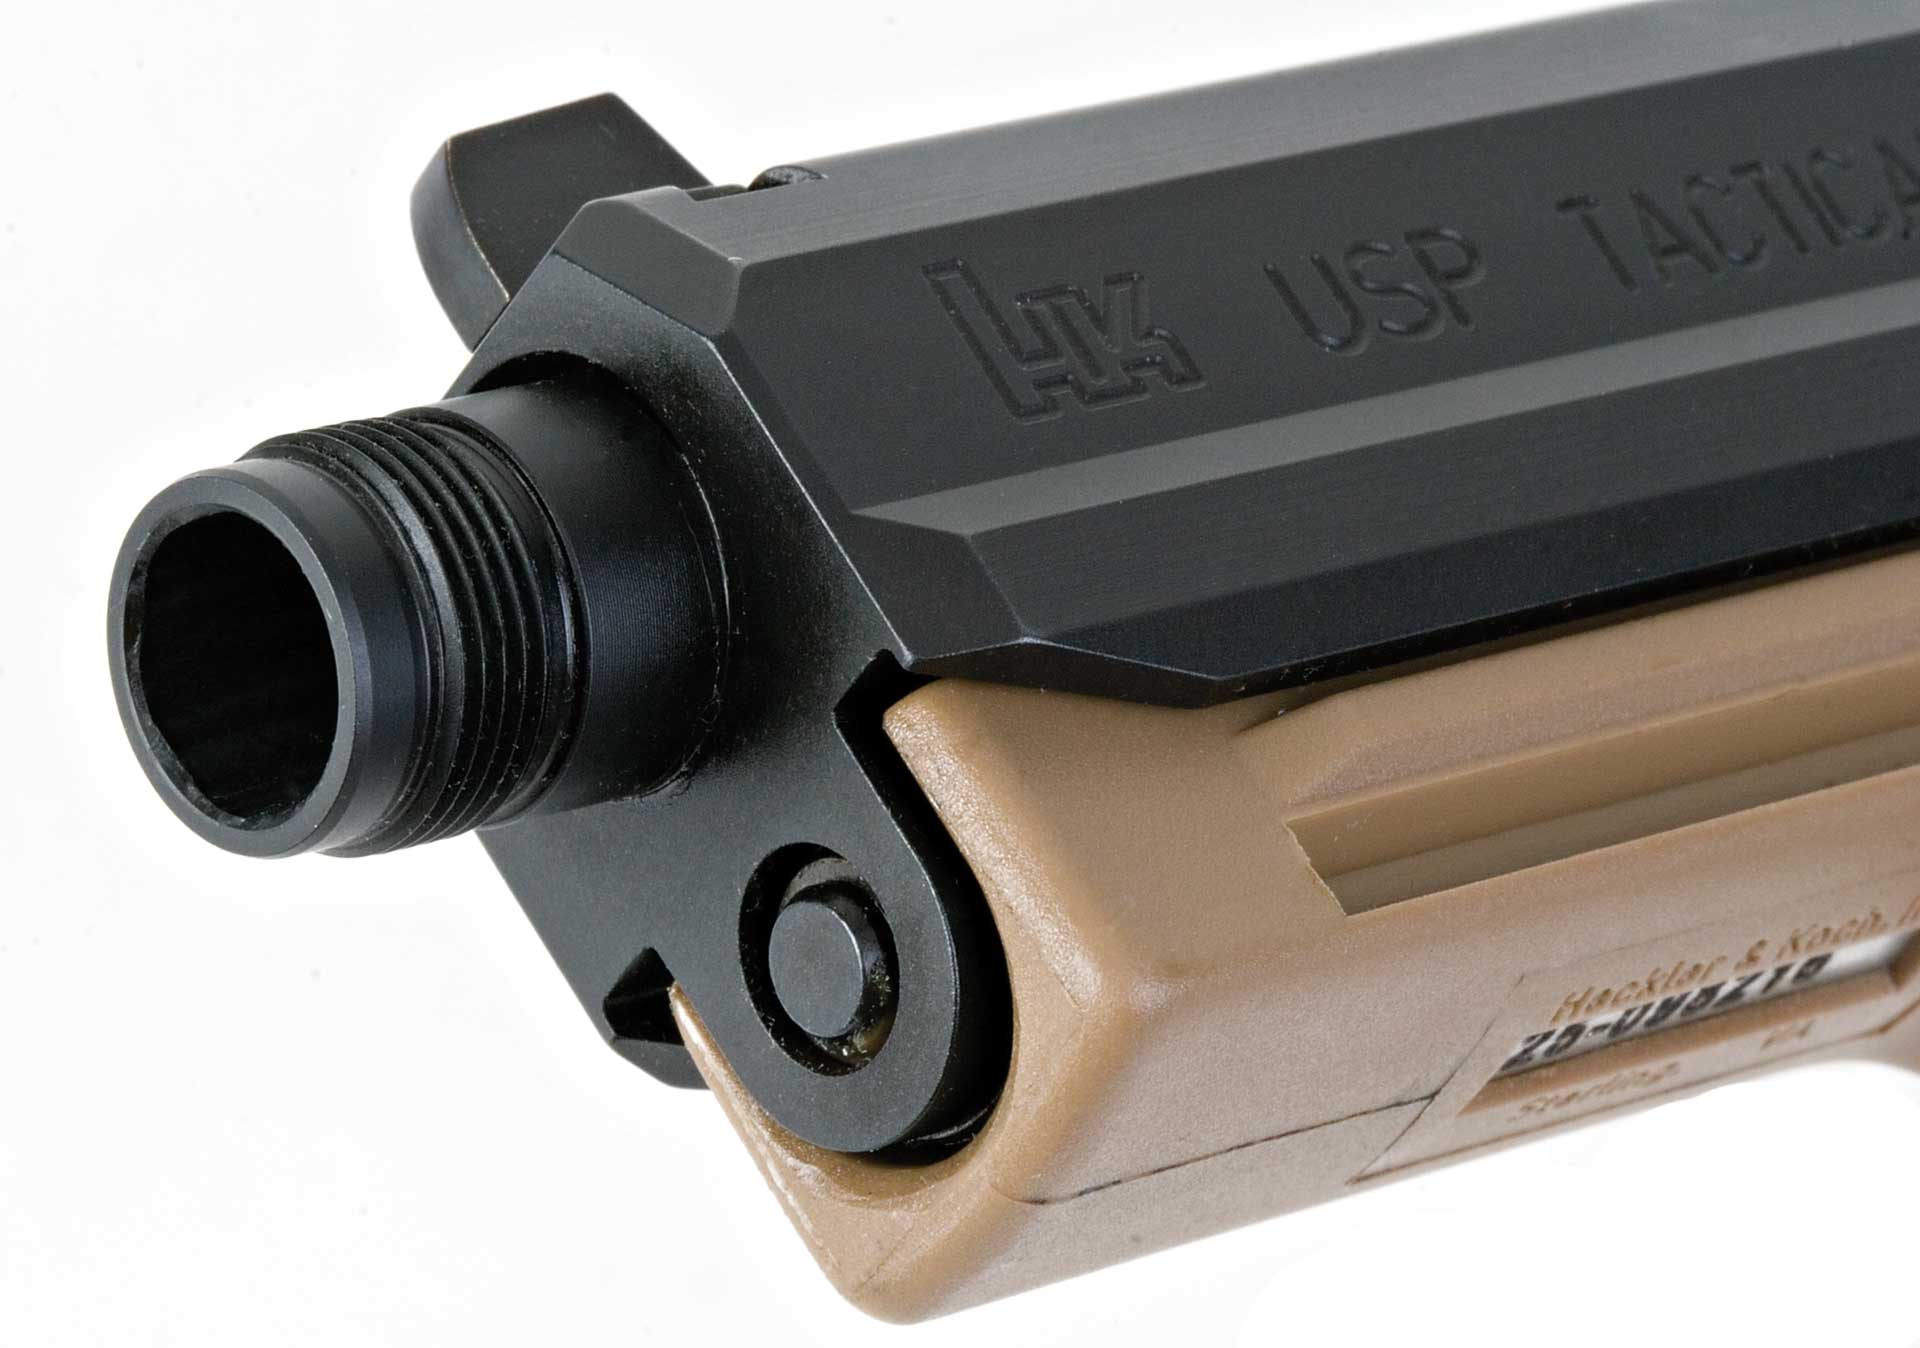 H&K USP Tactical .45 pistol muzzle barrel slide metal steel black tan plastic frame accessory rail